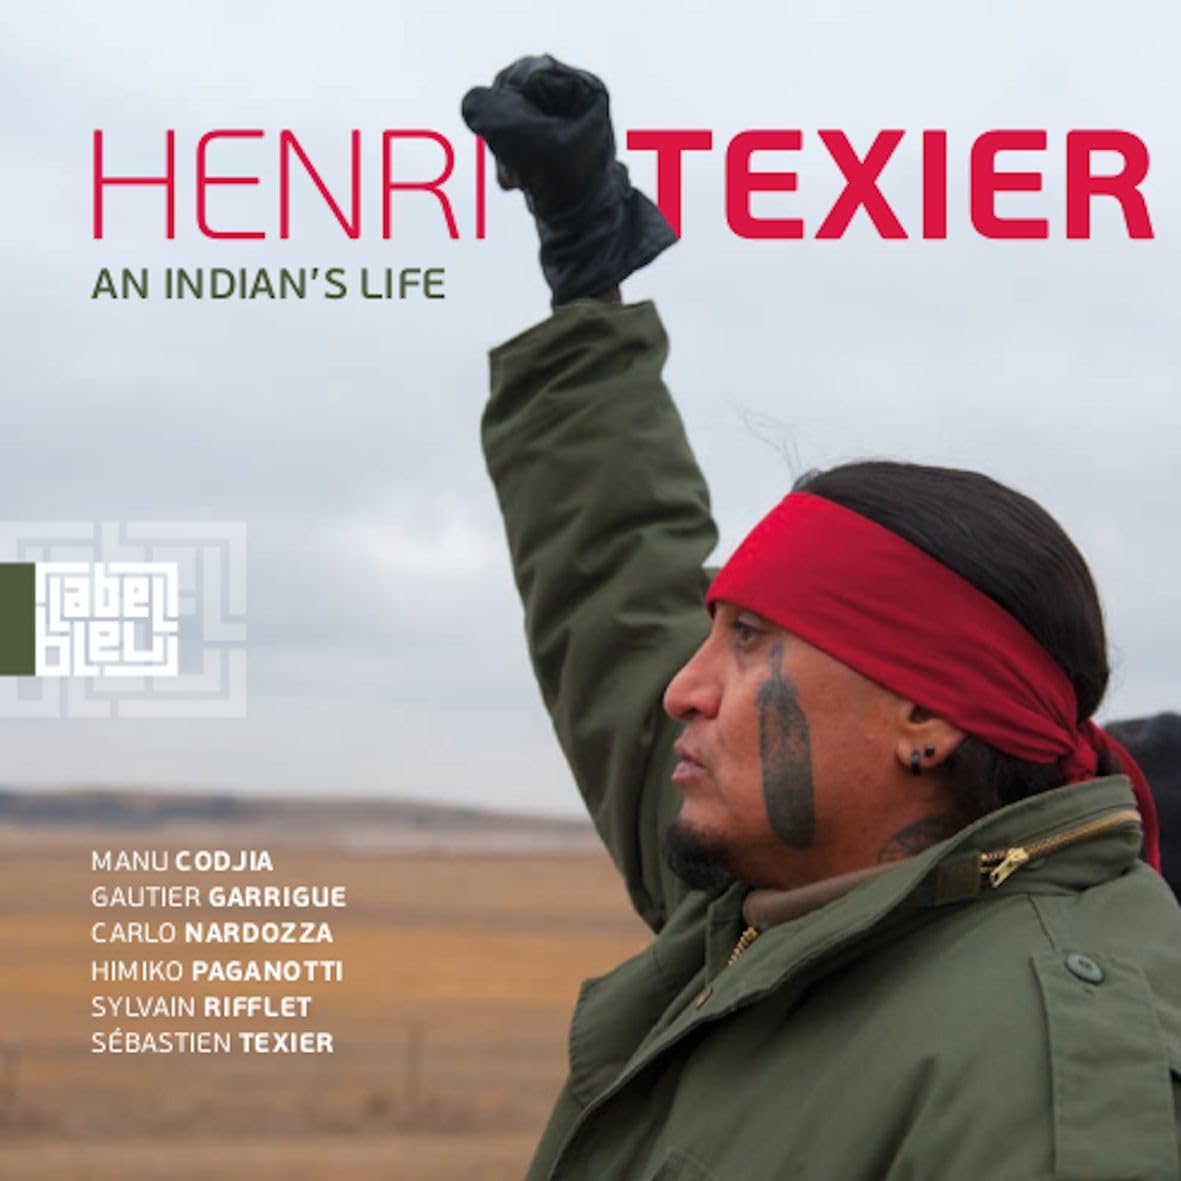 Henri texier - An Indian's Life